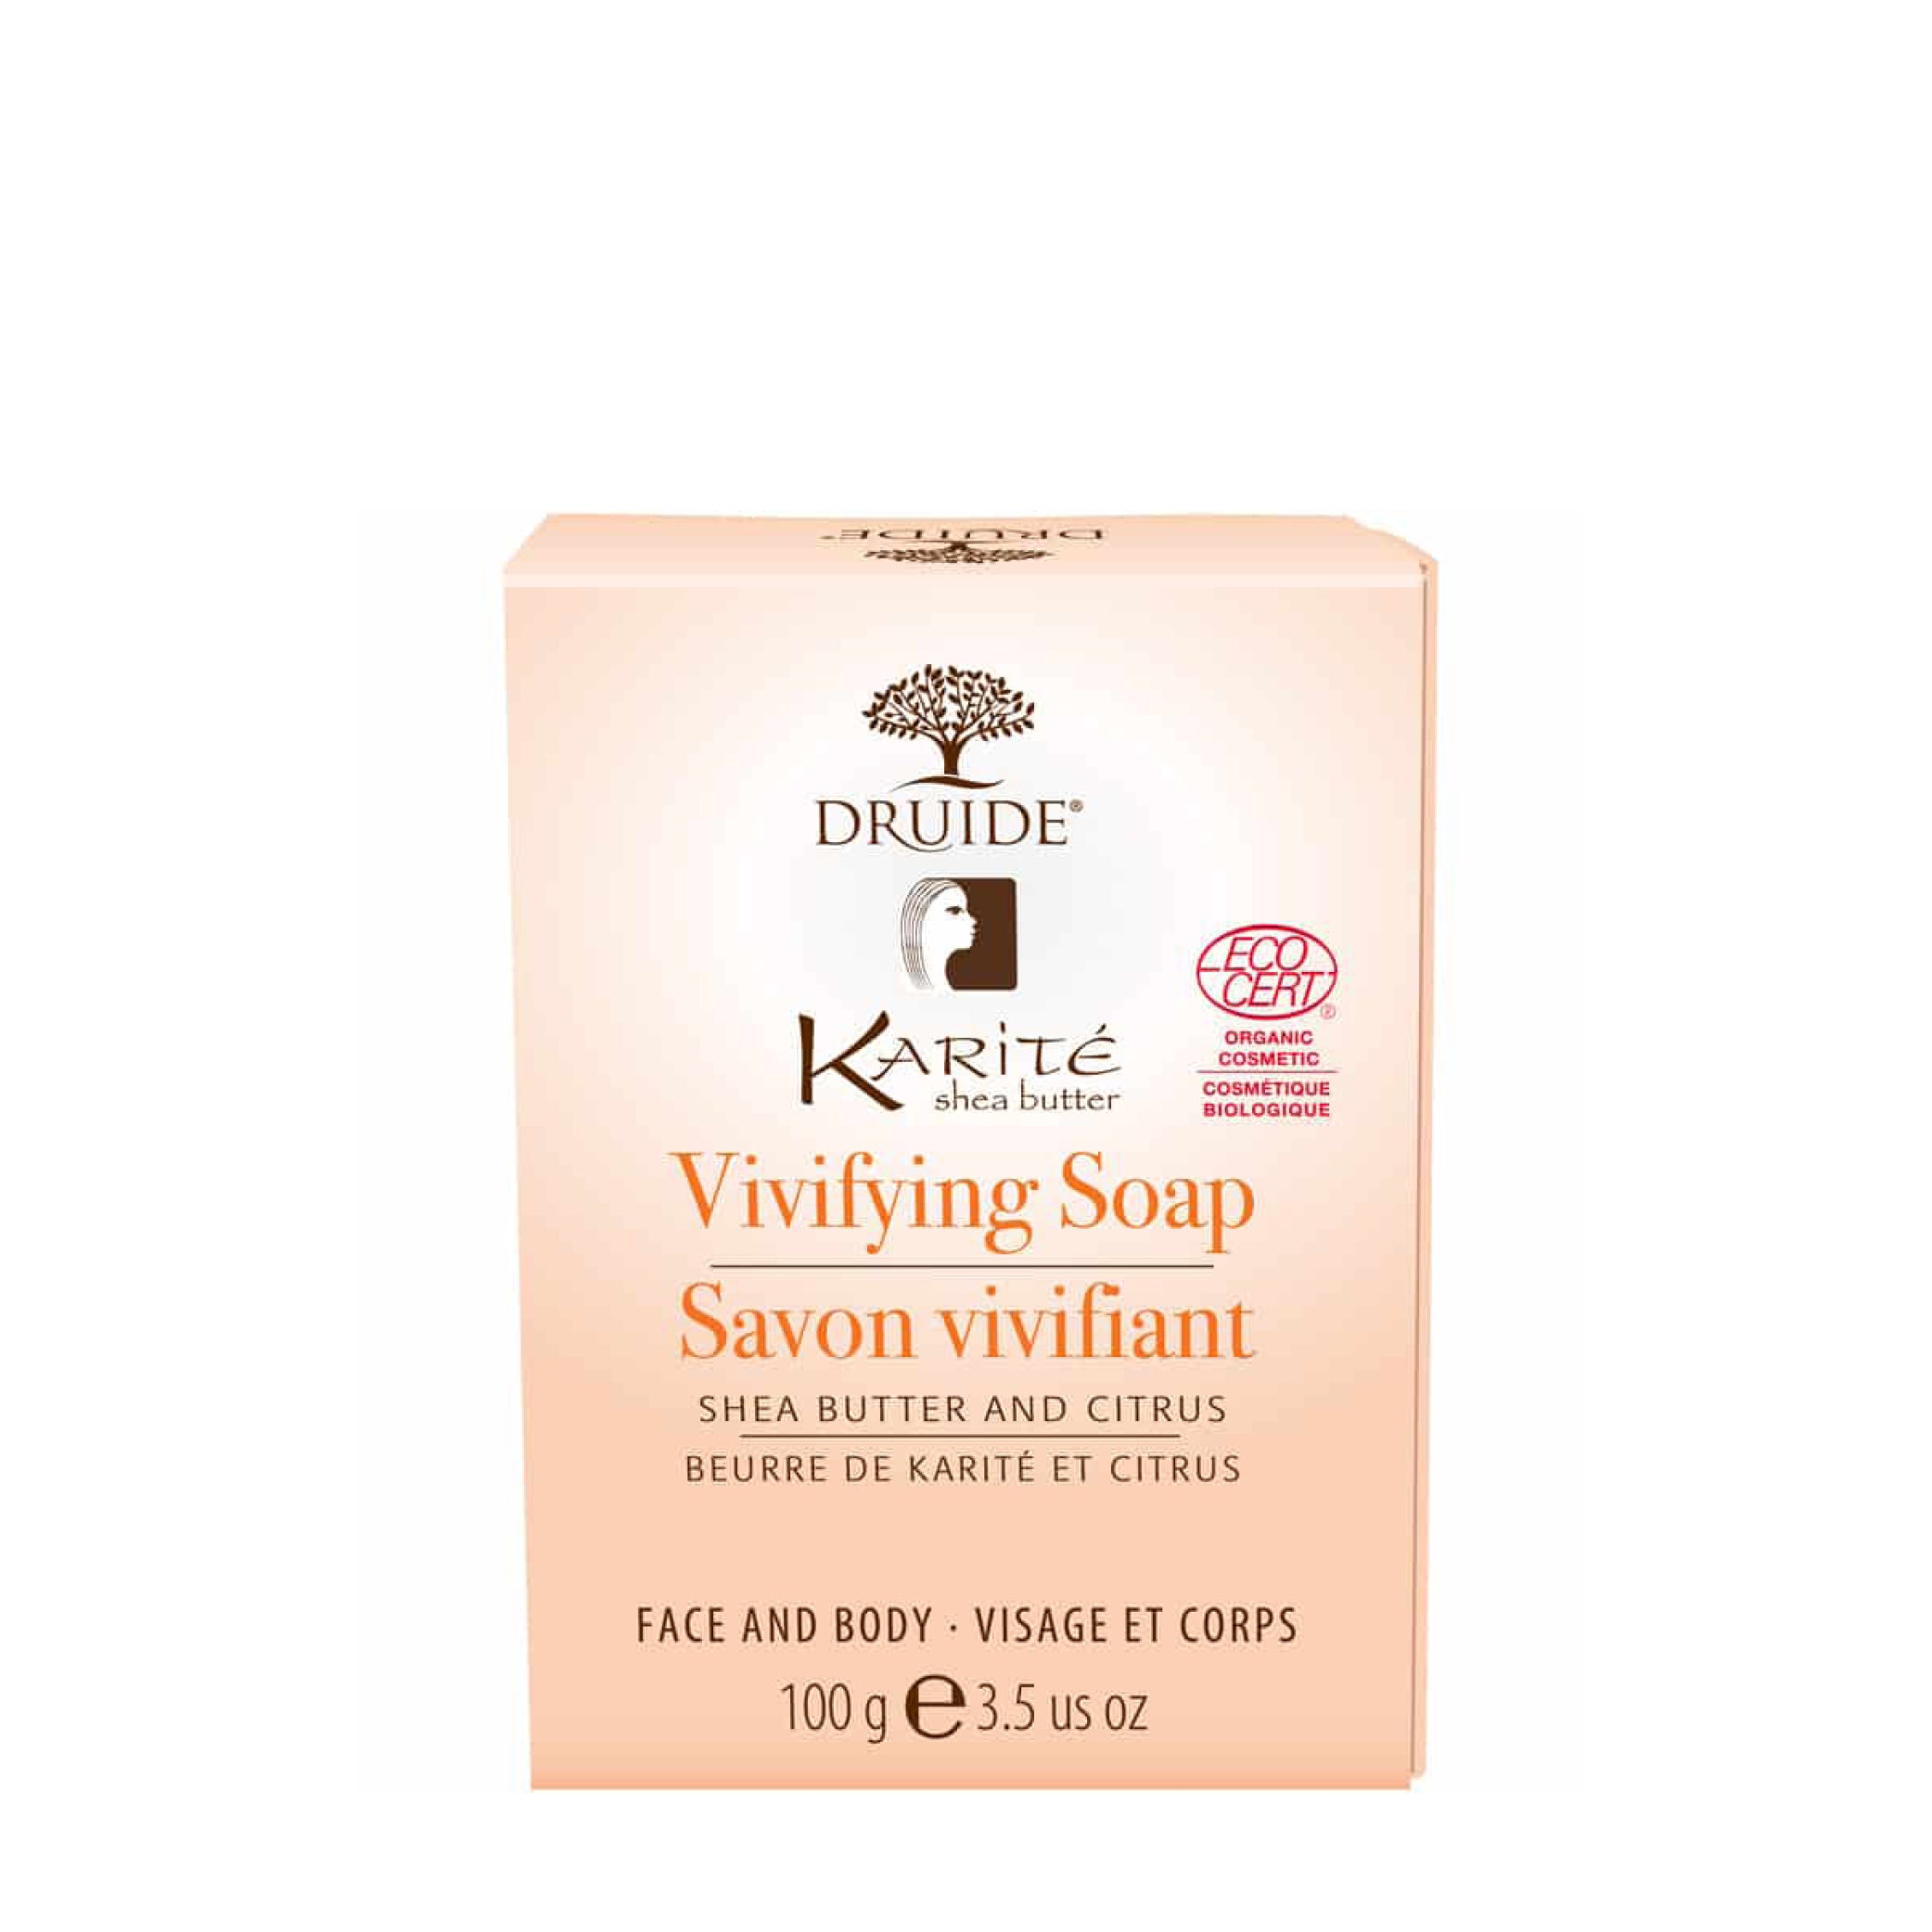 Vivifying Soap (Shea Butter & Citrus)